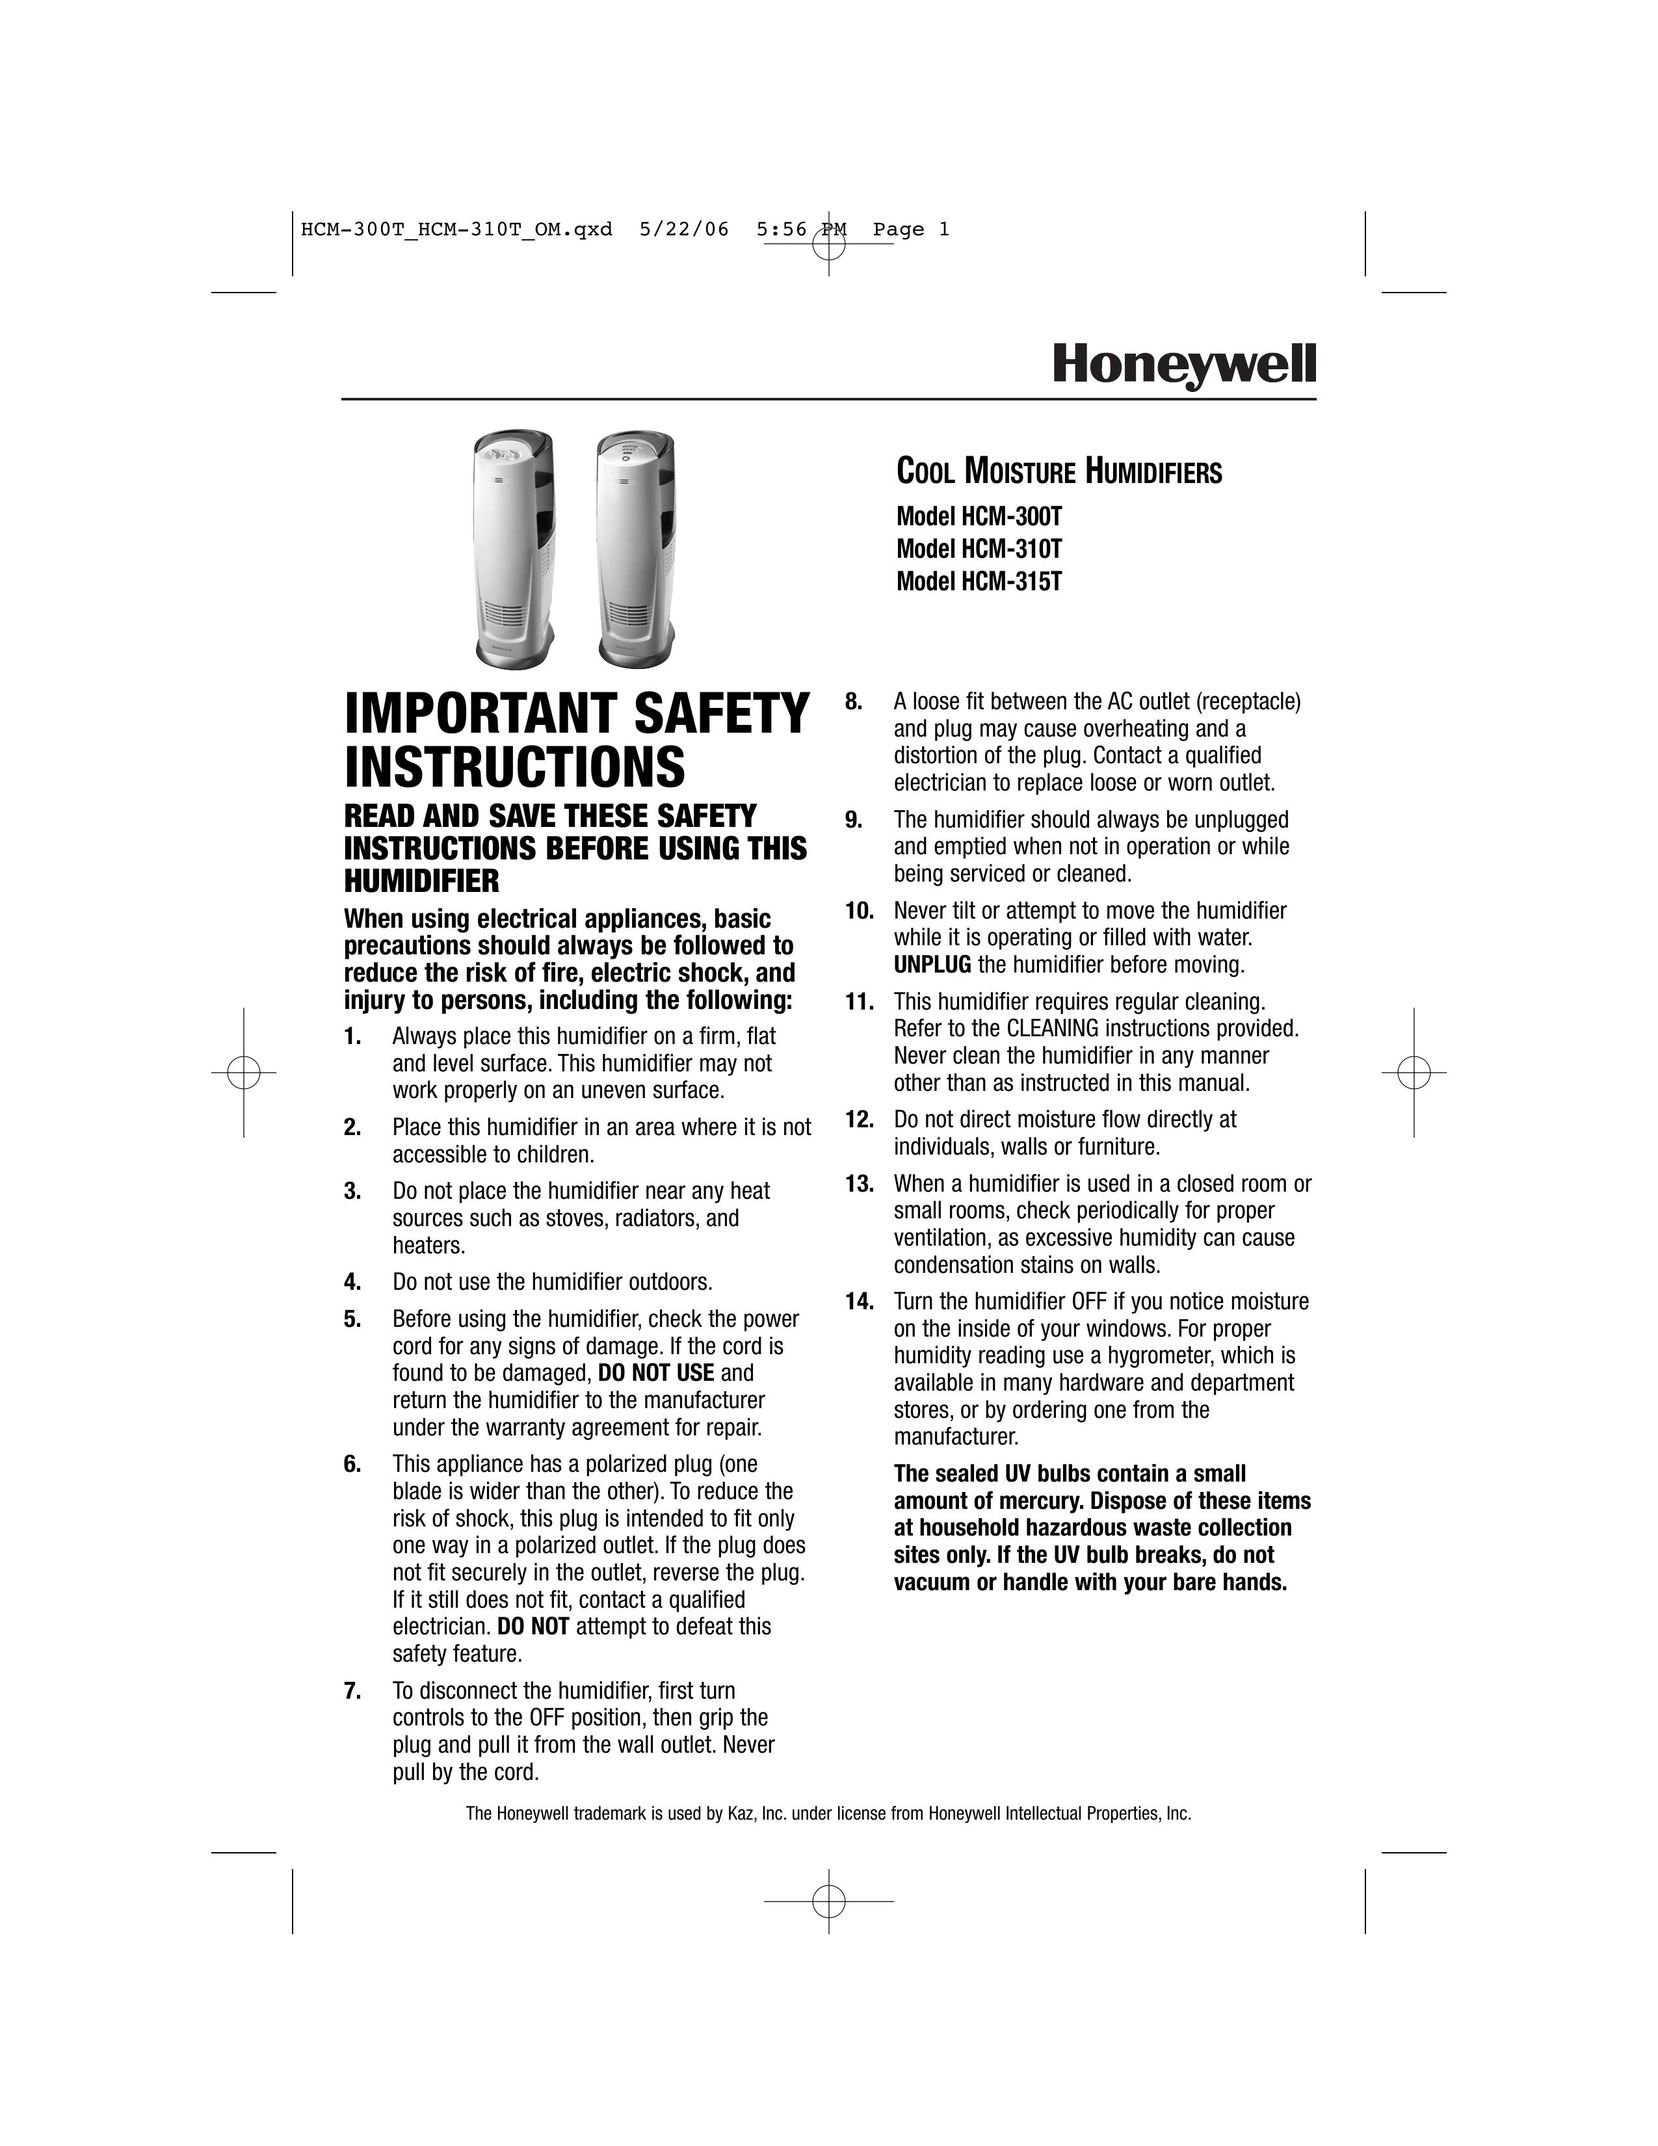 Honeywell HCM-300T Humidifier User Manual